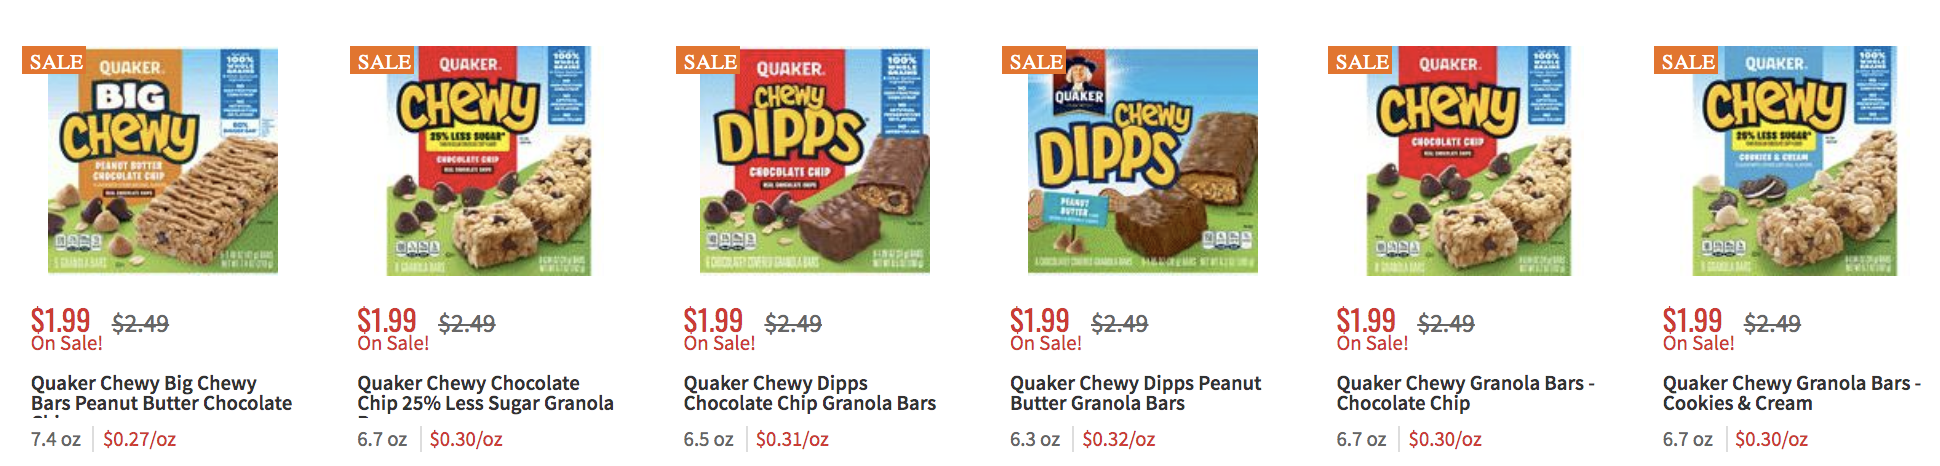 quaker-chewy-granola-bars-just-0-99-at-shoprite-rebate-living